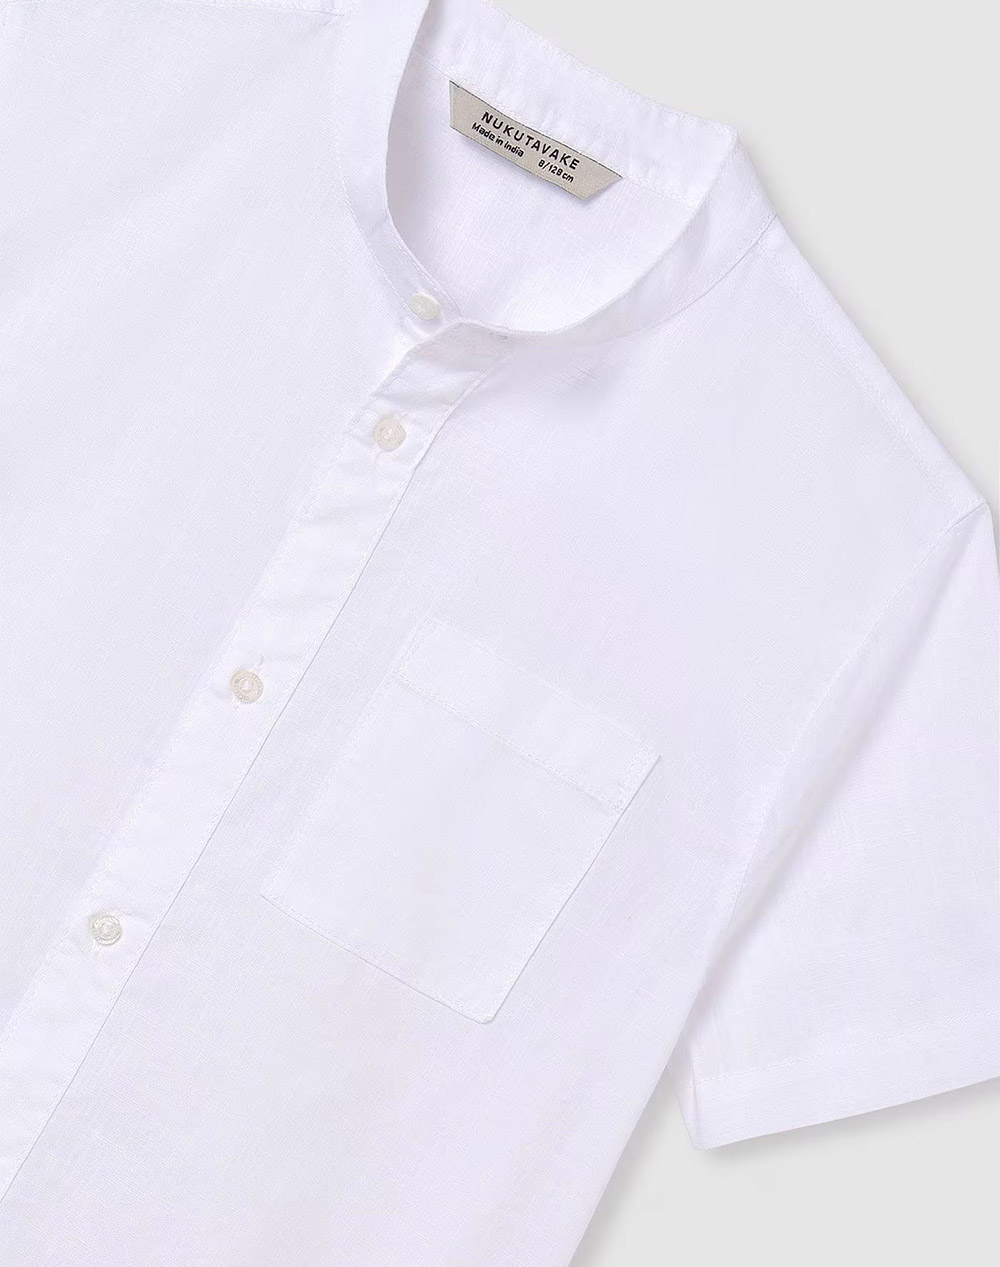 MAYORAL Shirt short/collar mao